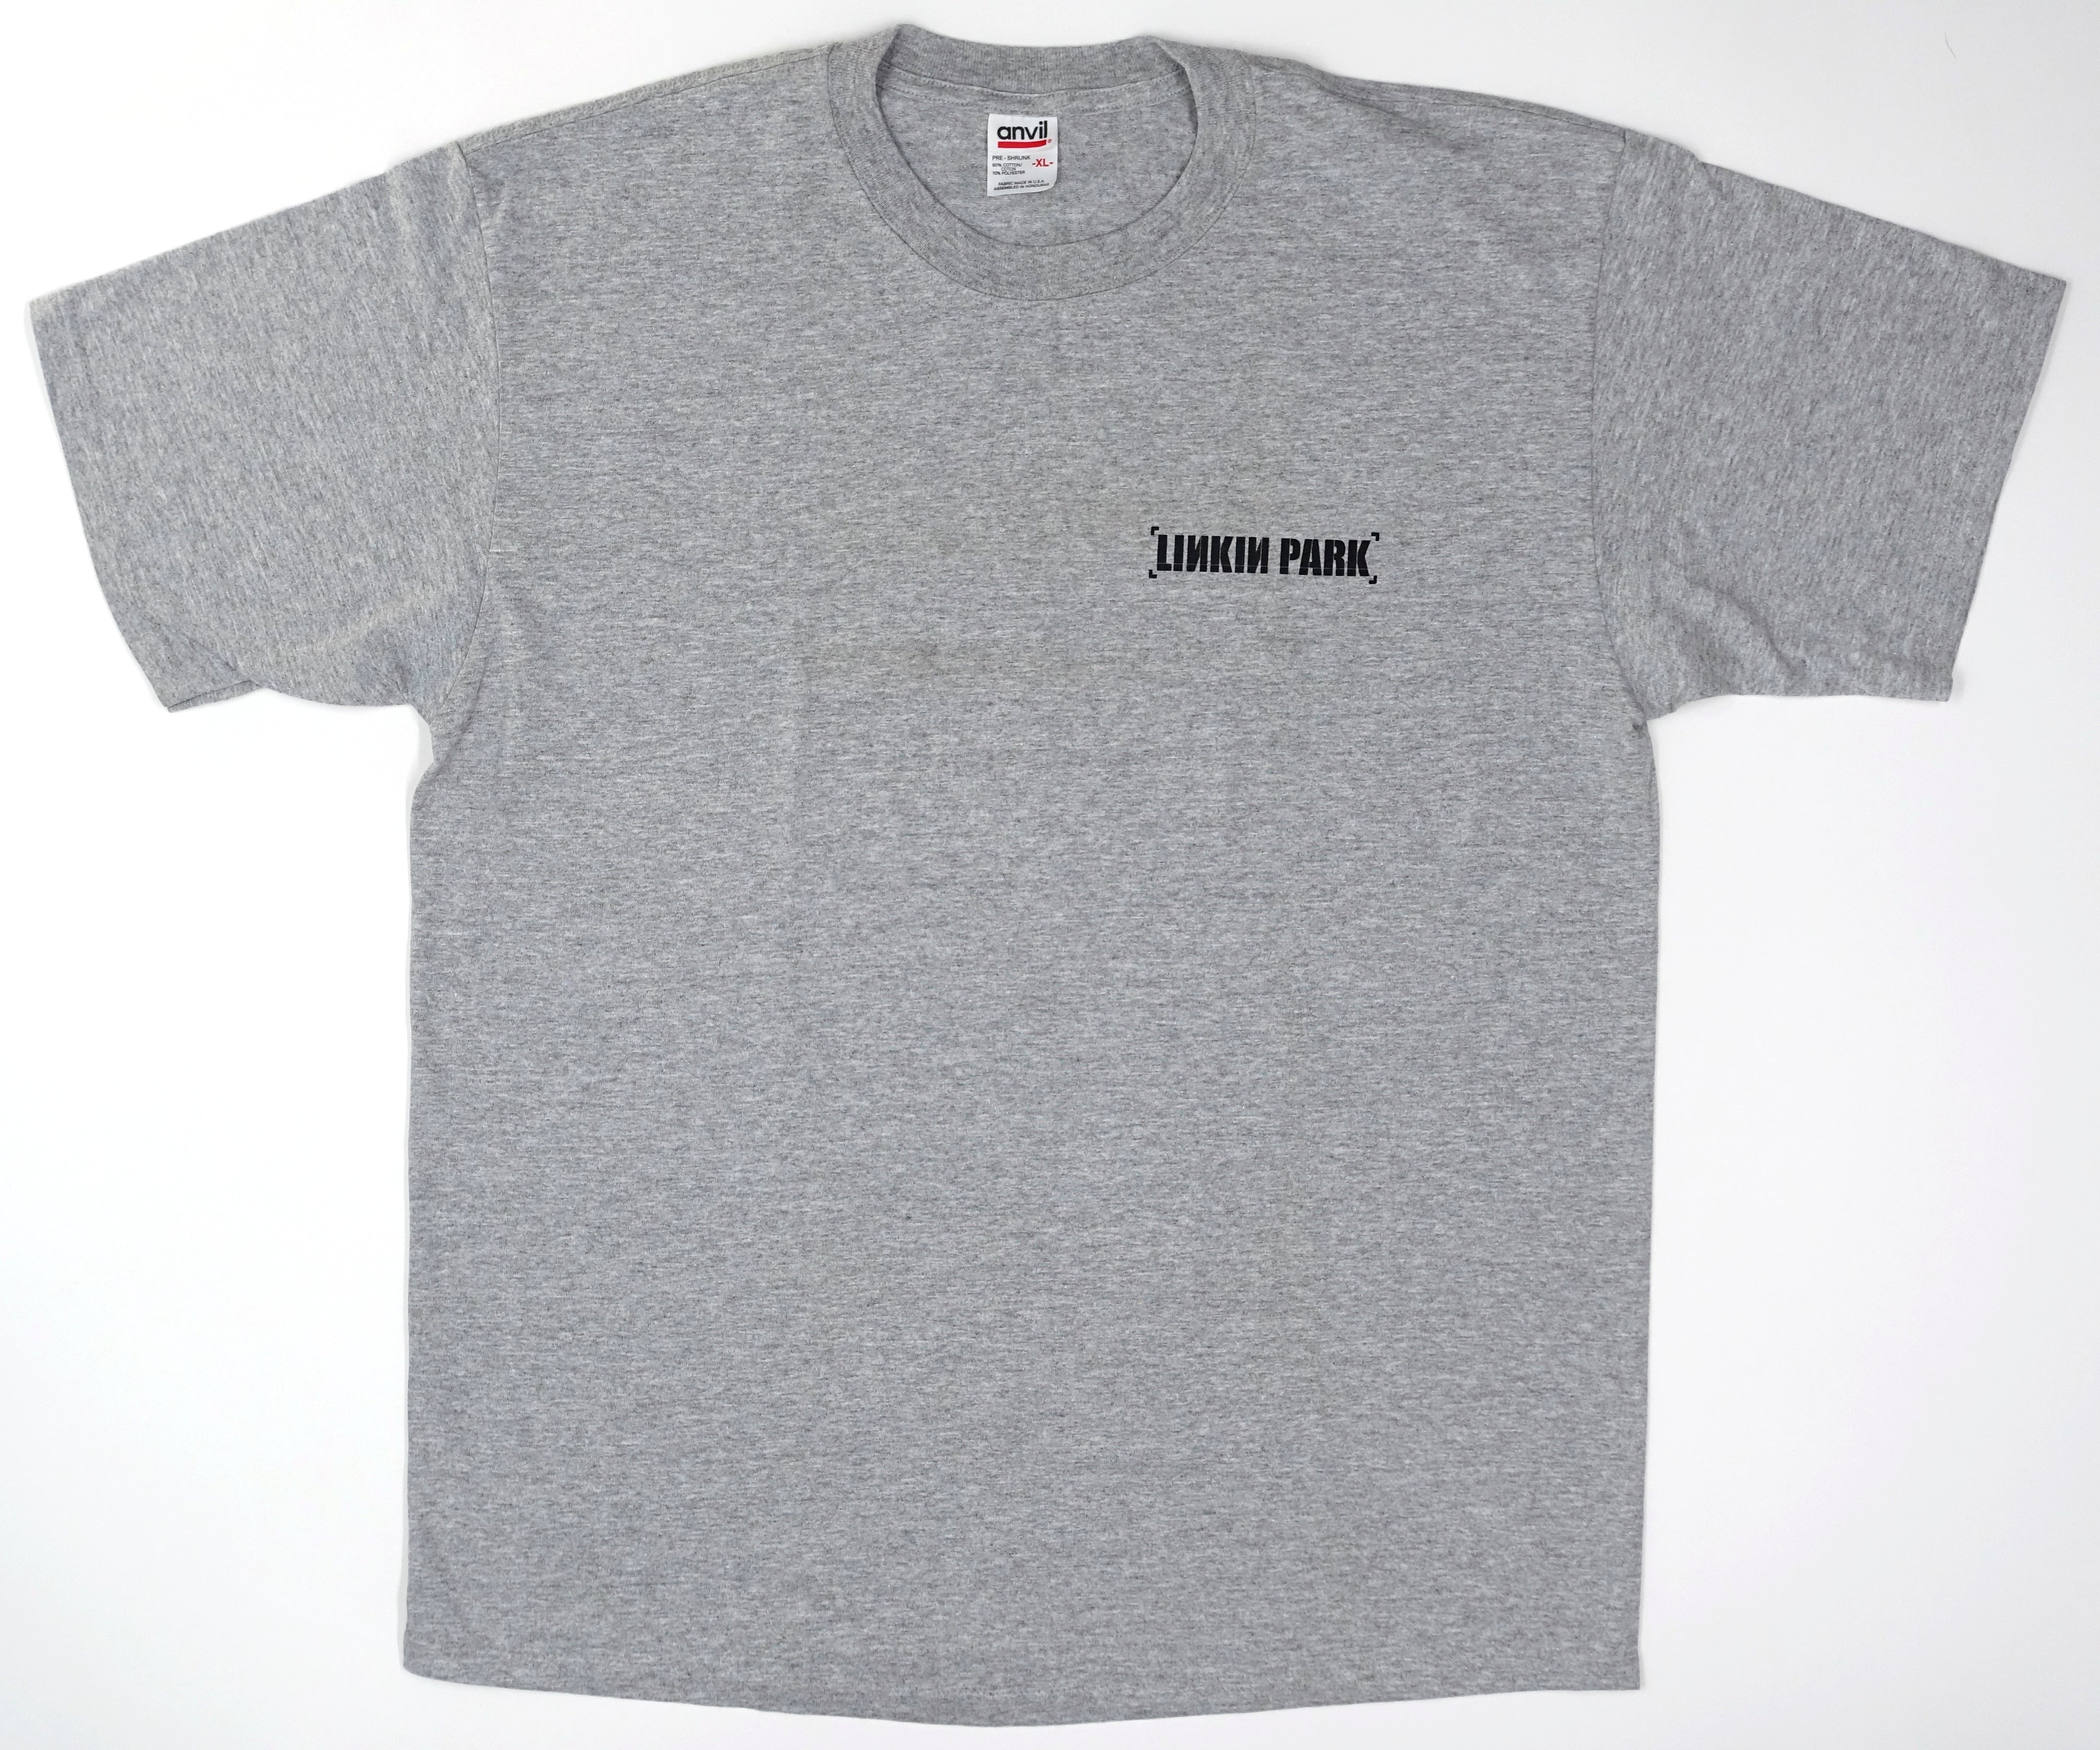 Linkin Park – Hybrid Theory 2000 Promo Tour Shirt Size XL